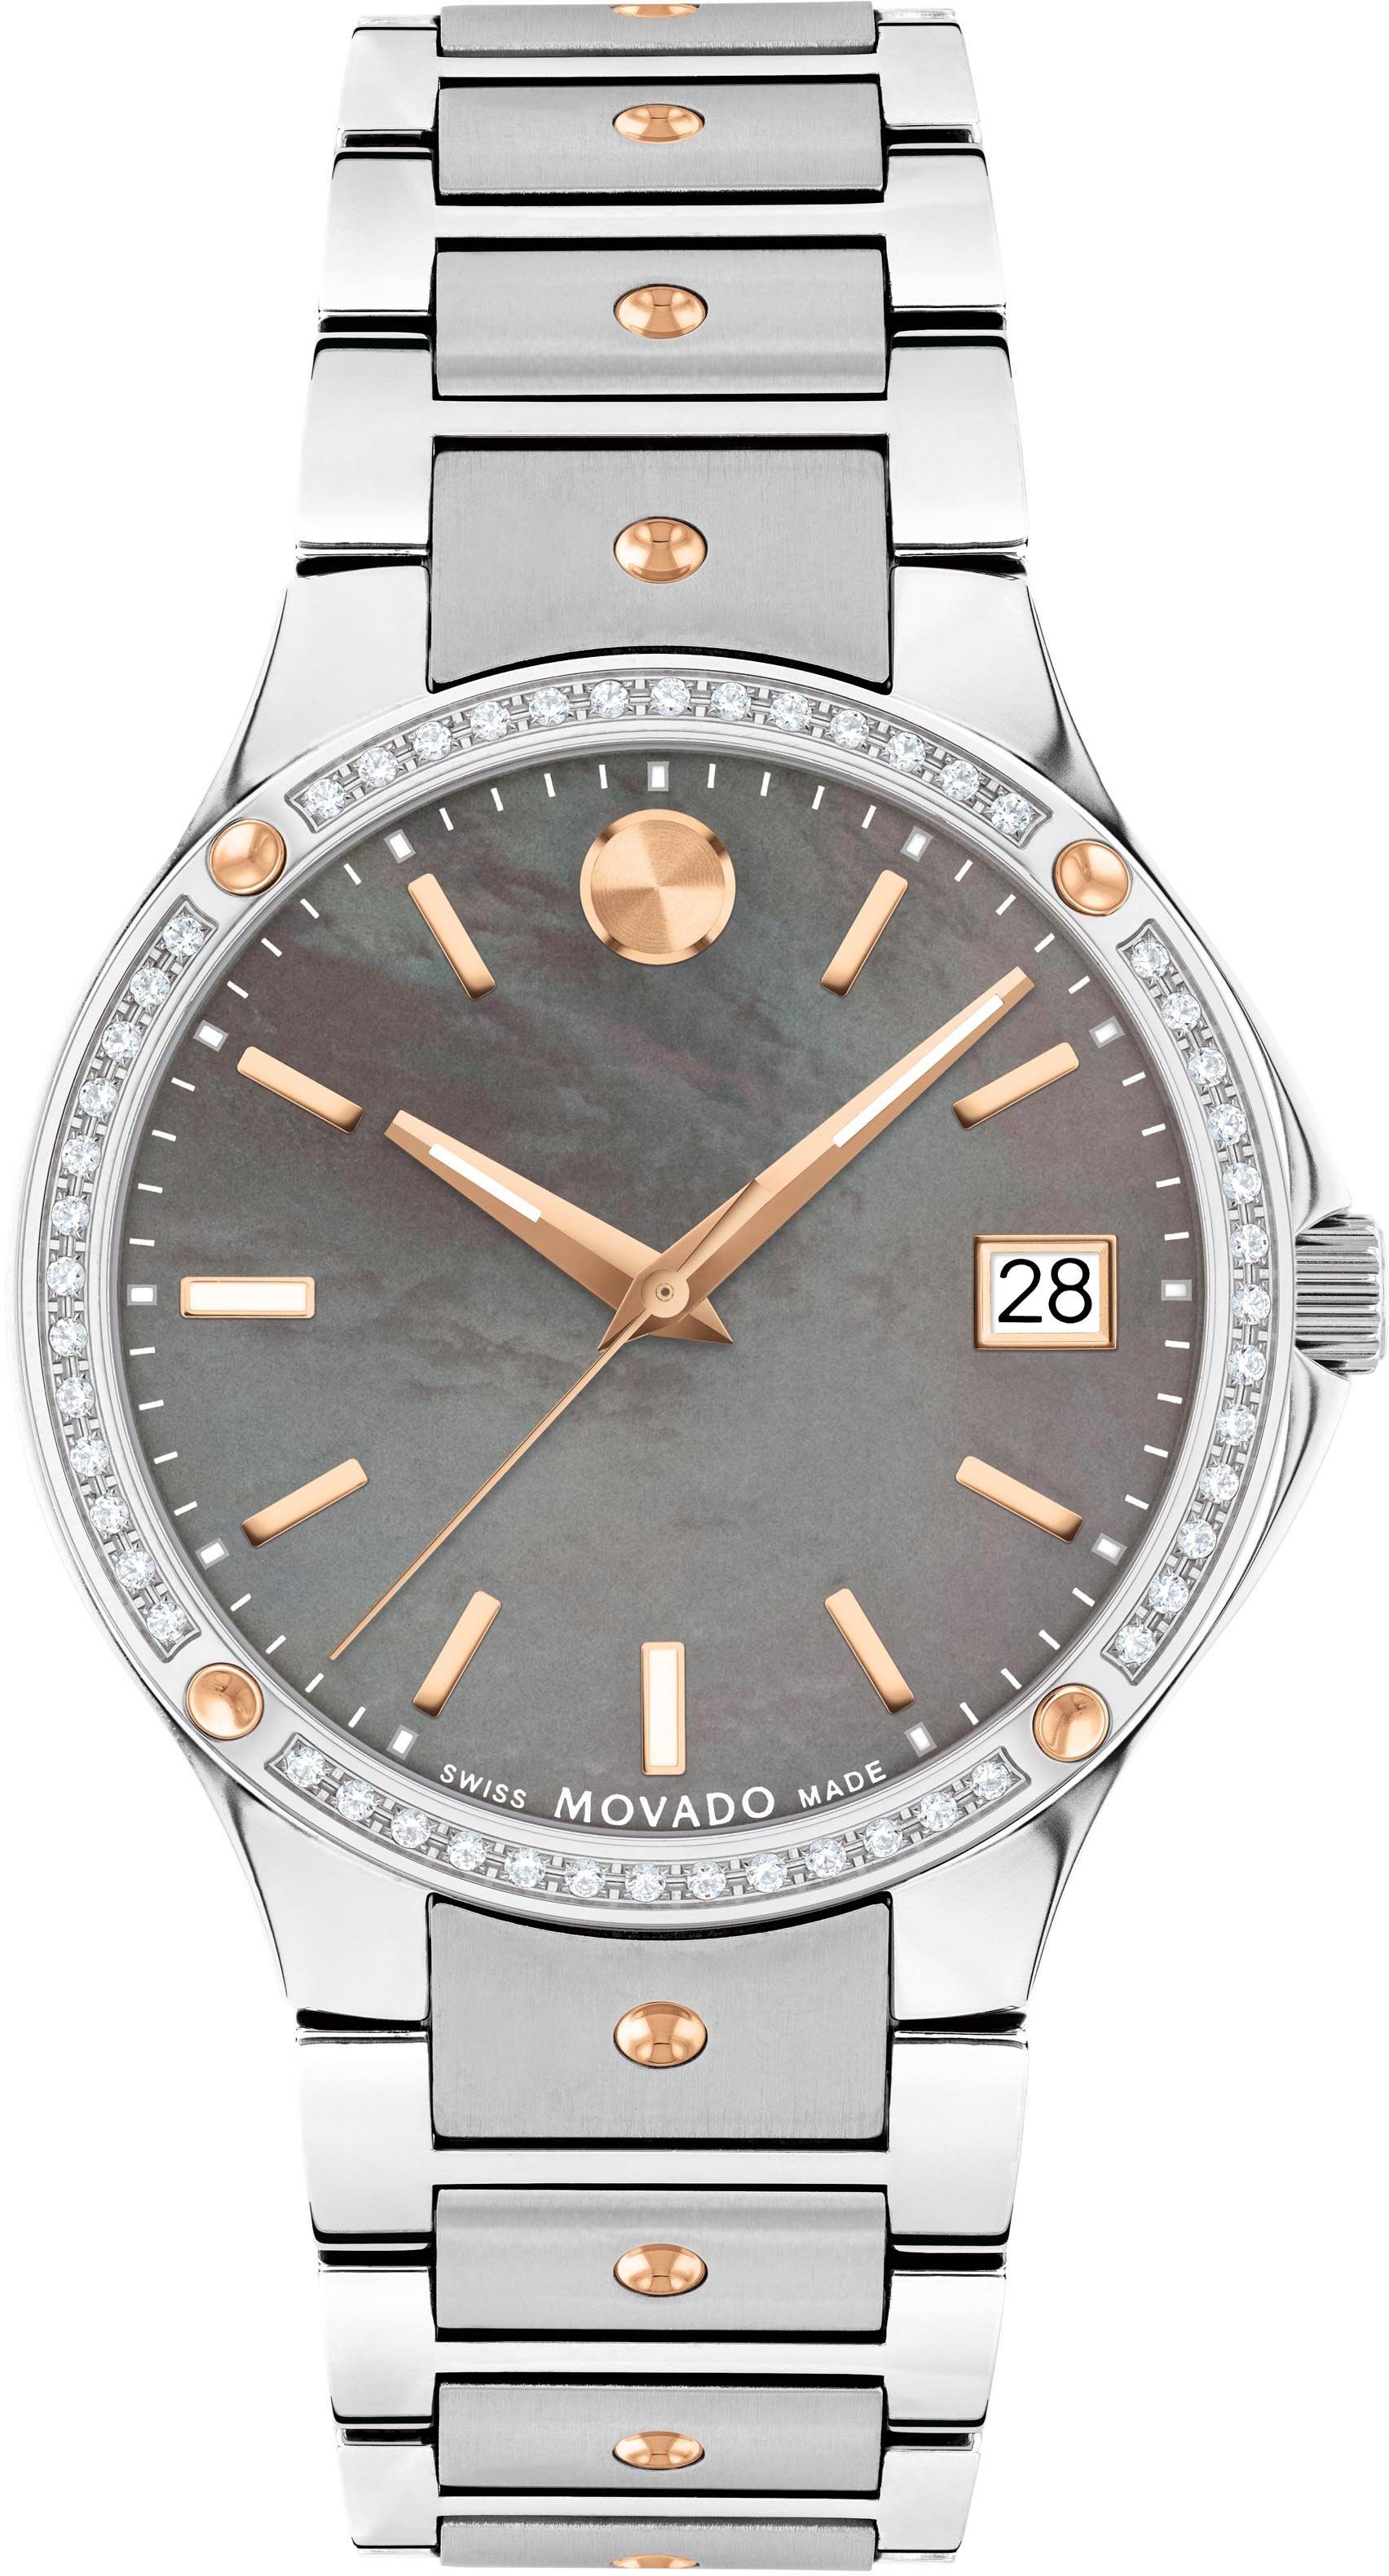 MOVADO Schweizer Uhr SE Quarz, 0607706, Quarzuhr, Armbanduhr, Damenuhr, Swiss Made, Diamant-Steine, Perlmutt